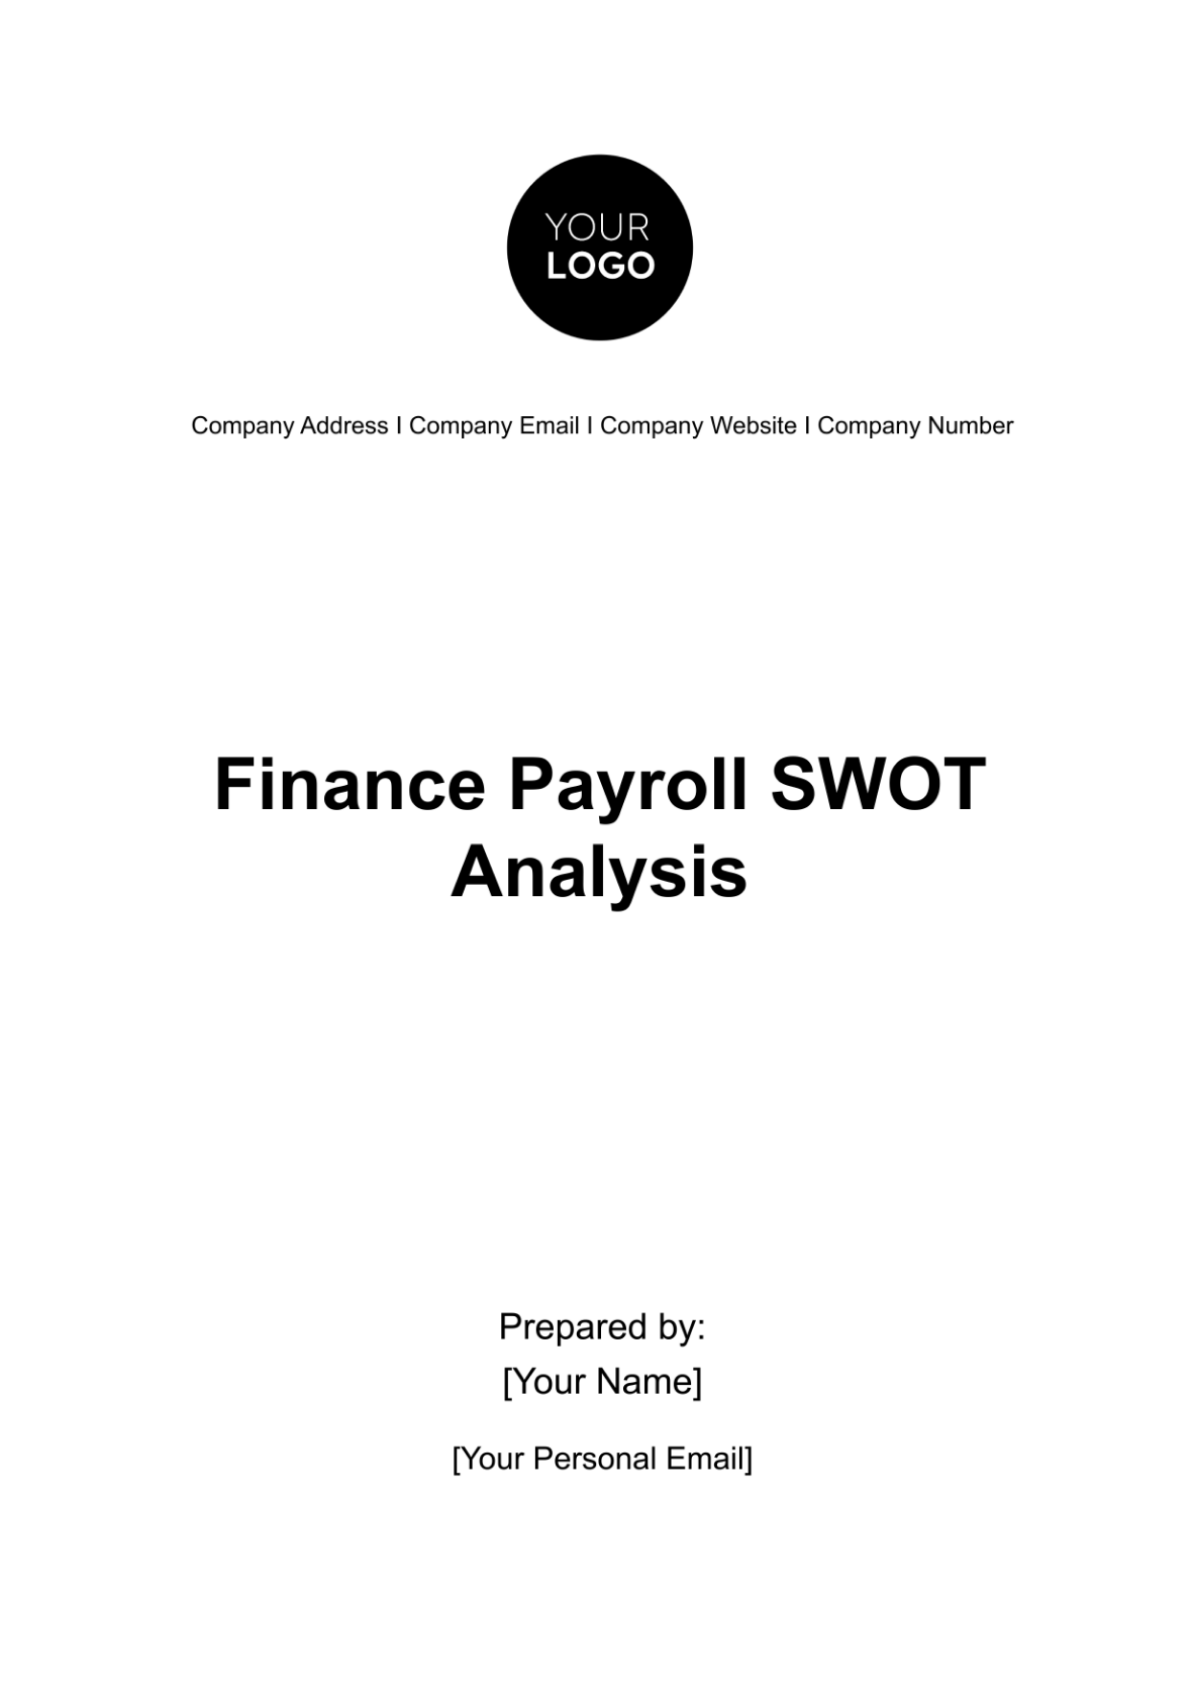 Finance Payroll SWOT Analysis Template